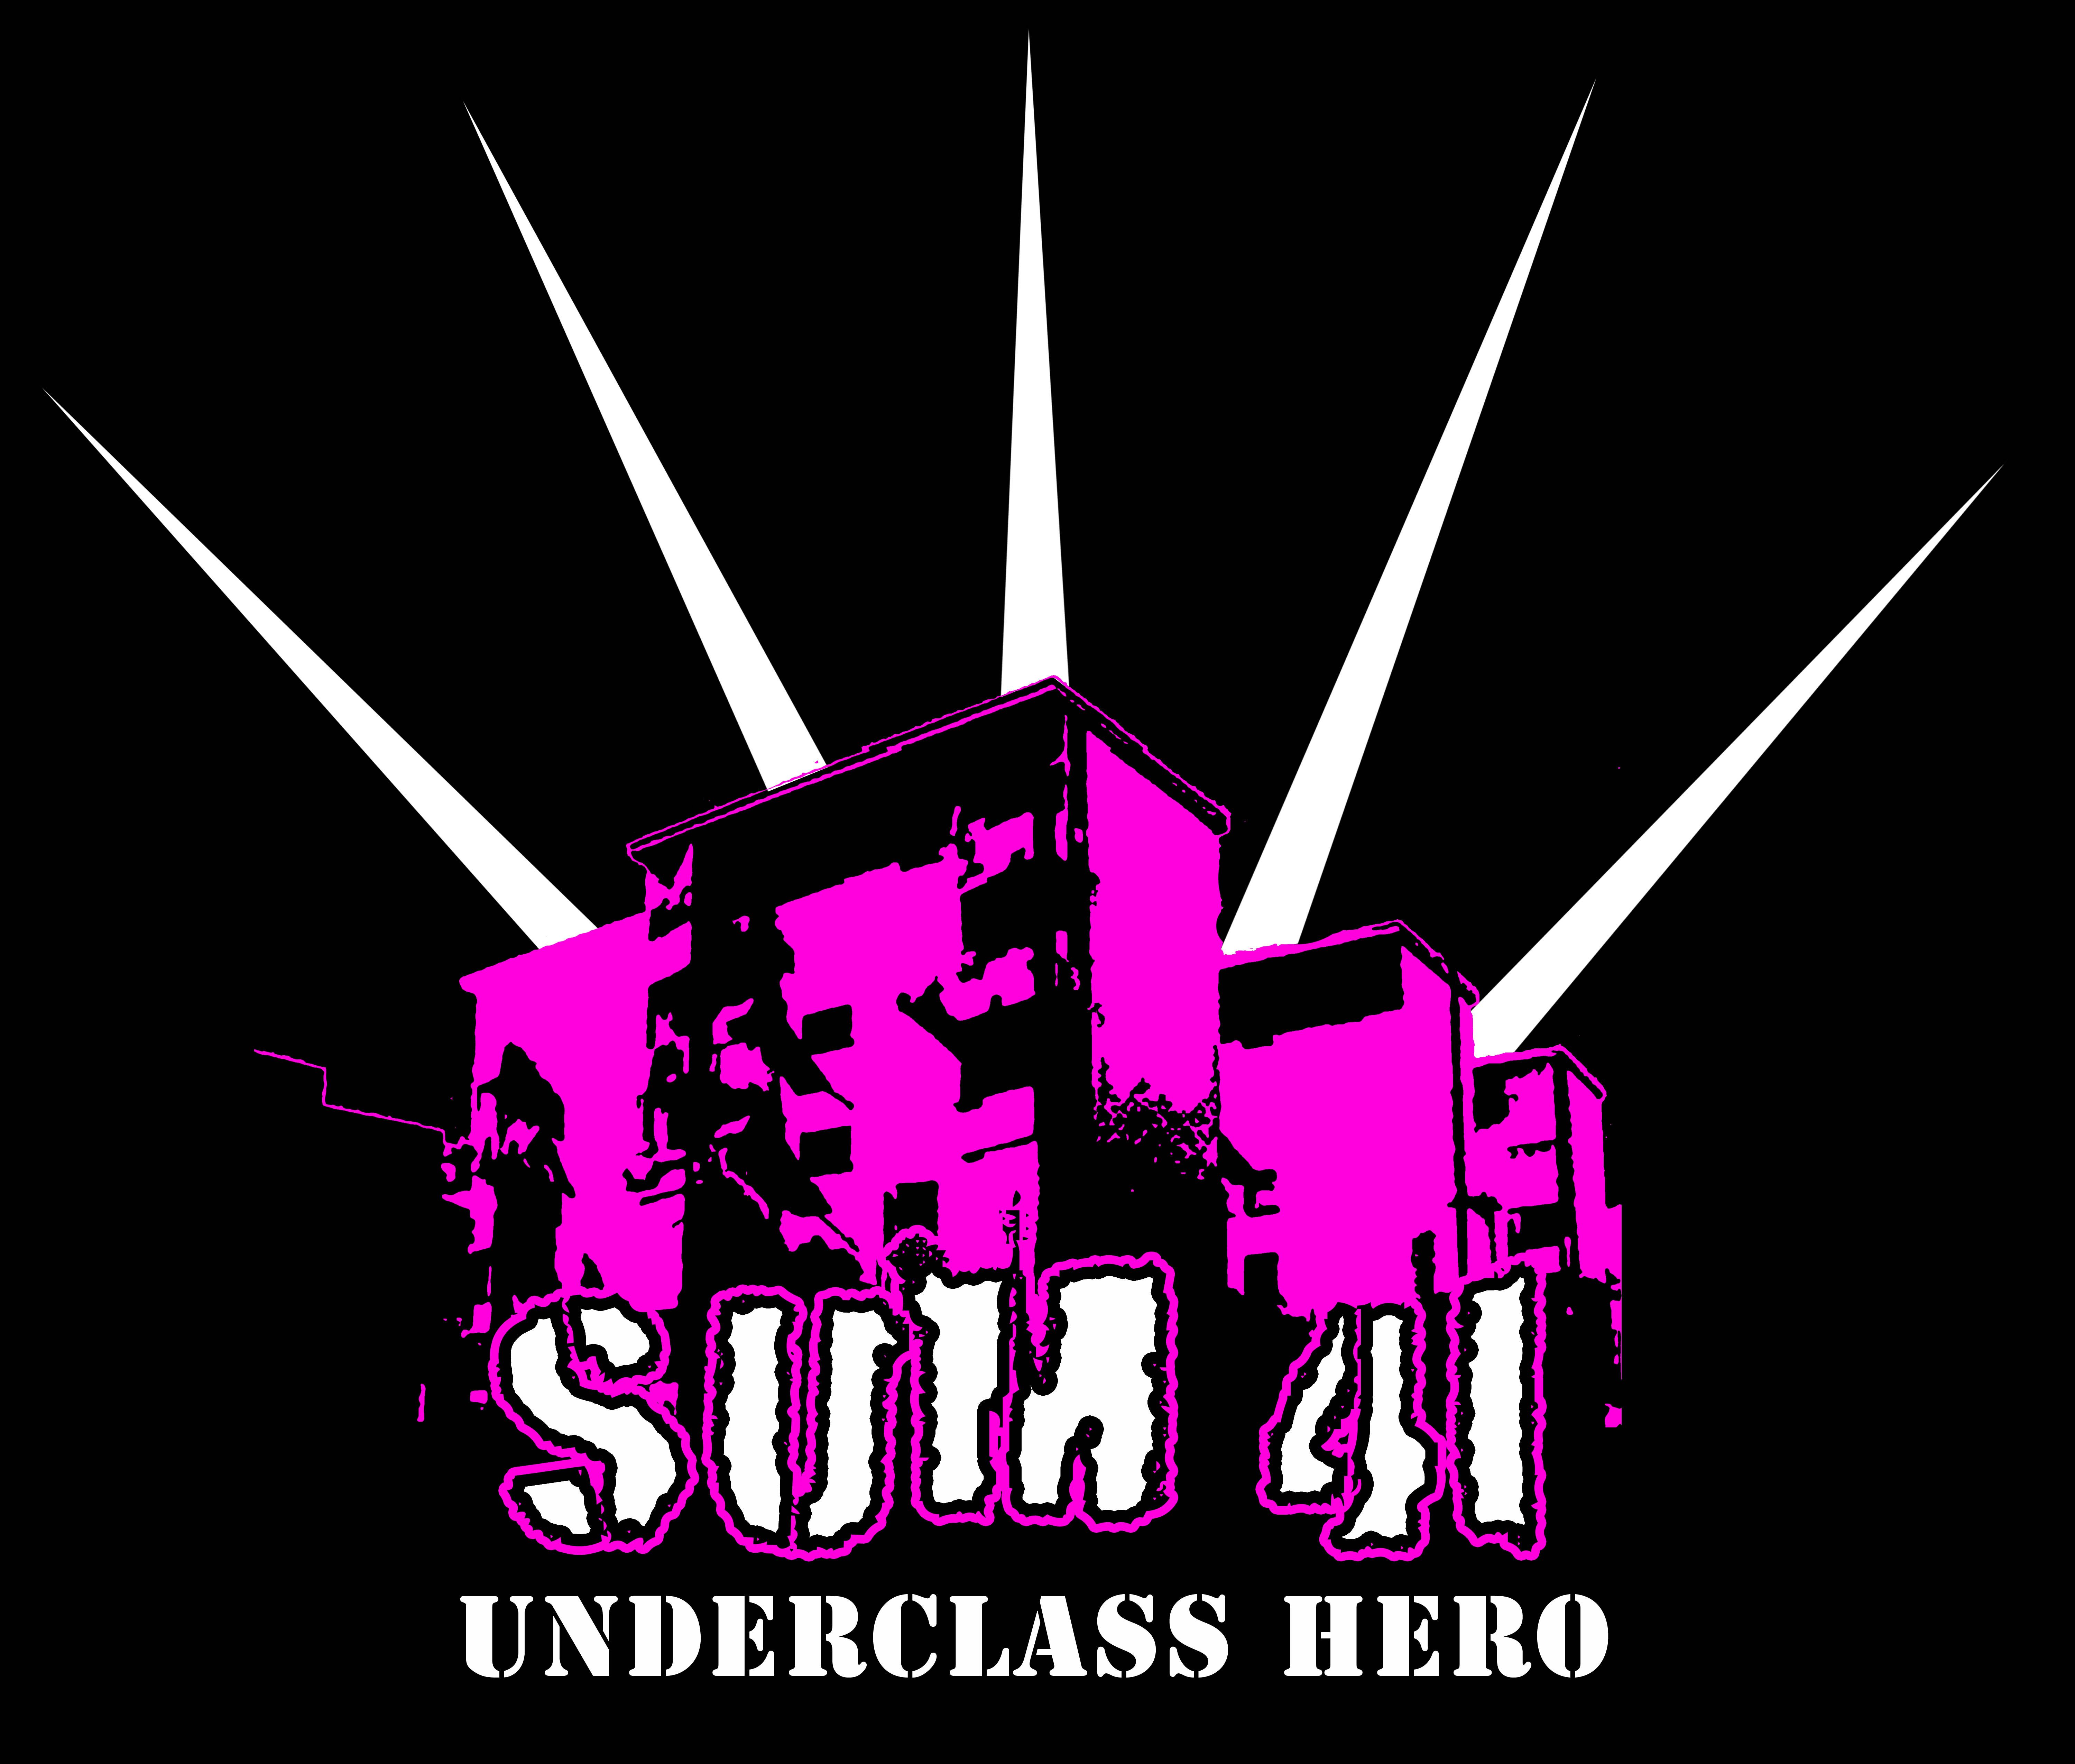 Sum 41 Underclass Hero by kevmb009 on DeviantArt